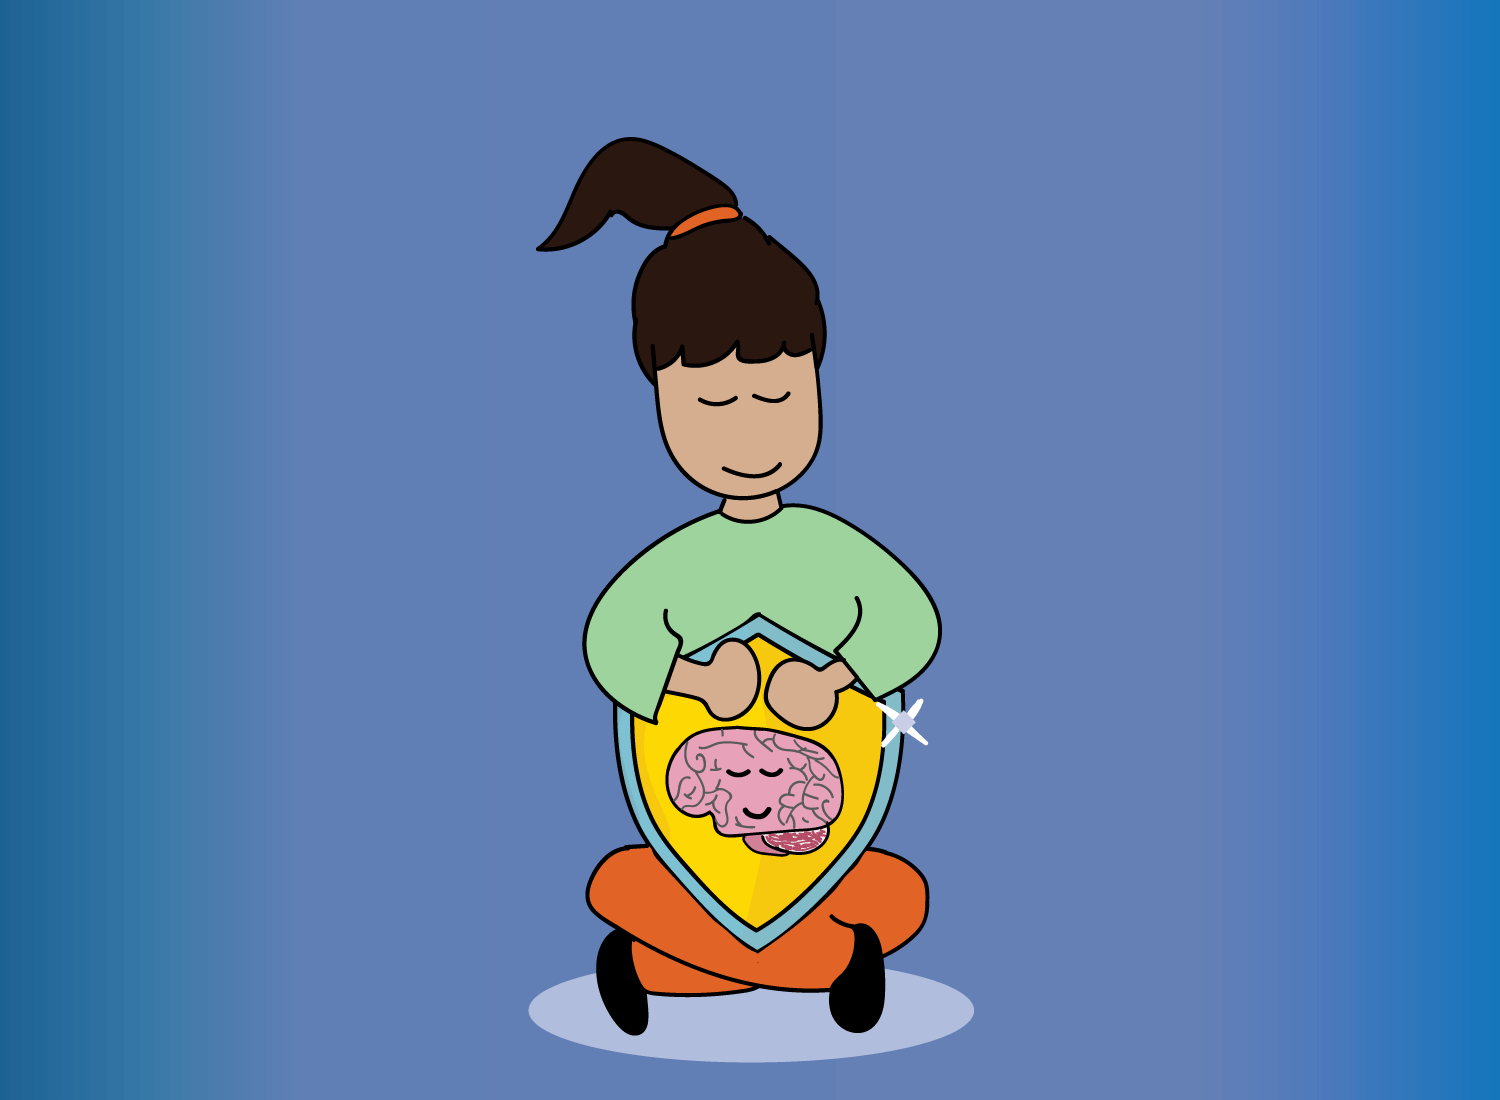 hugging the mind cartoon illustration